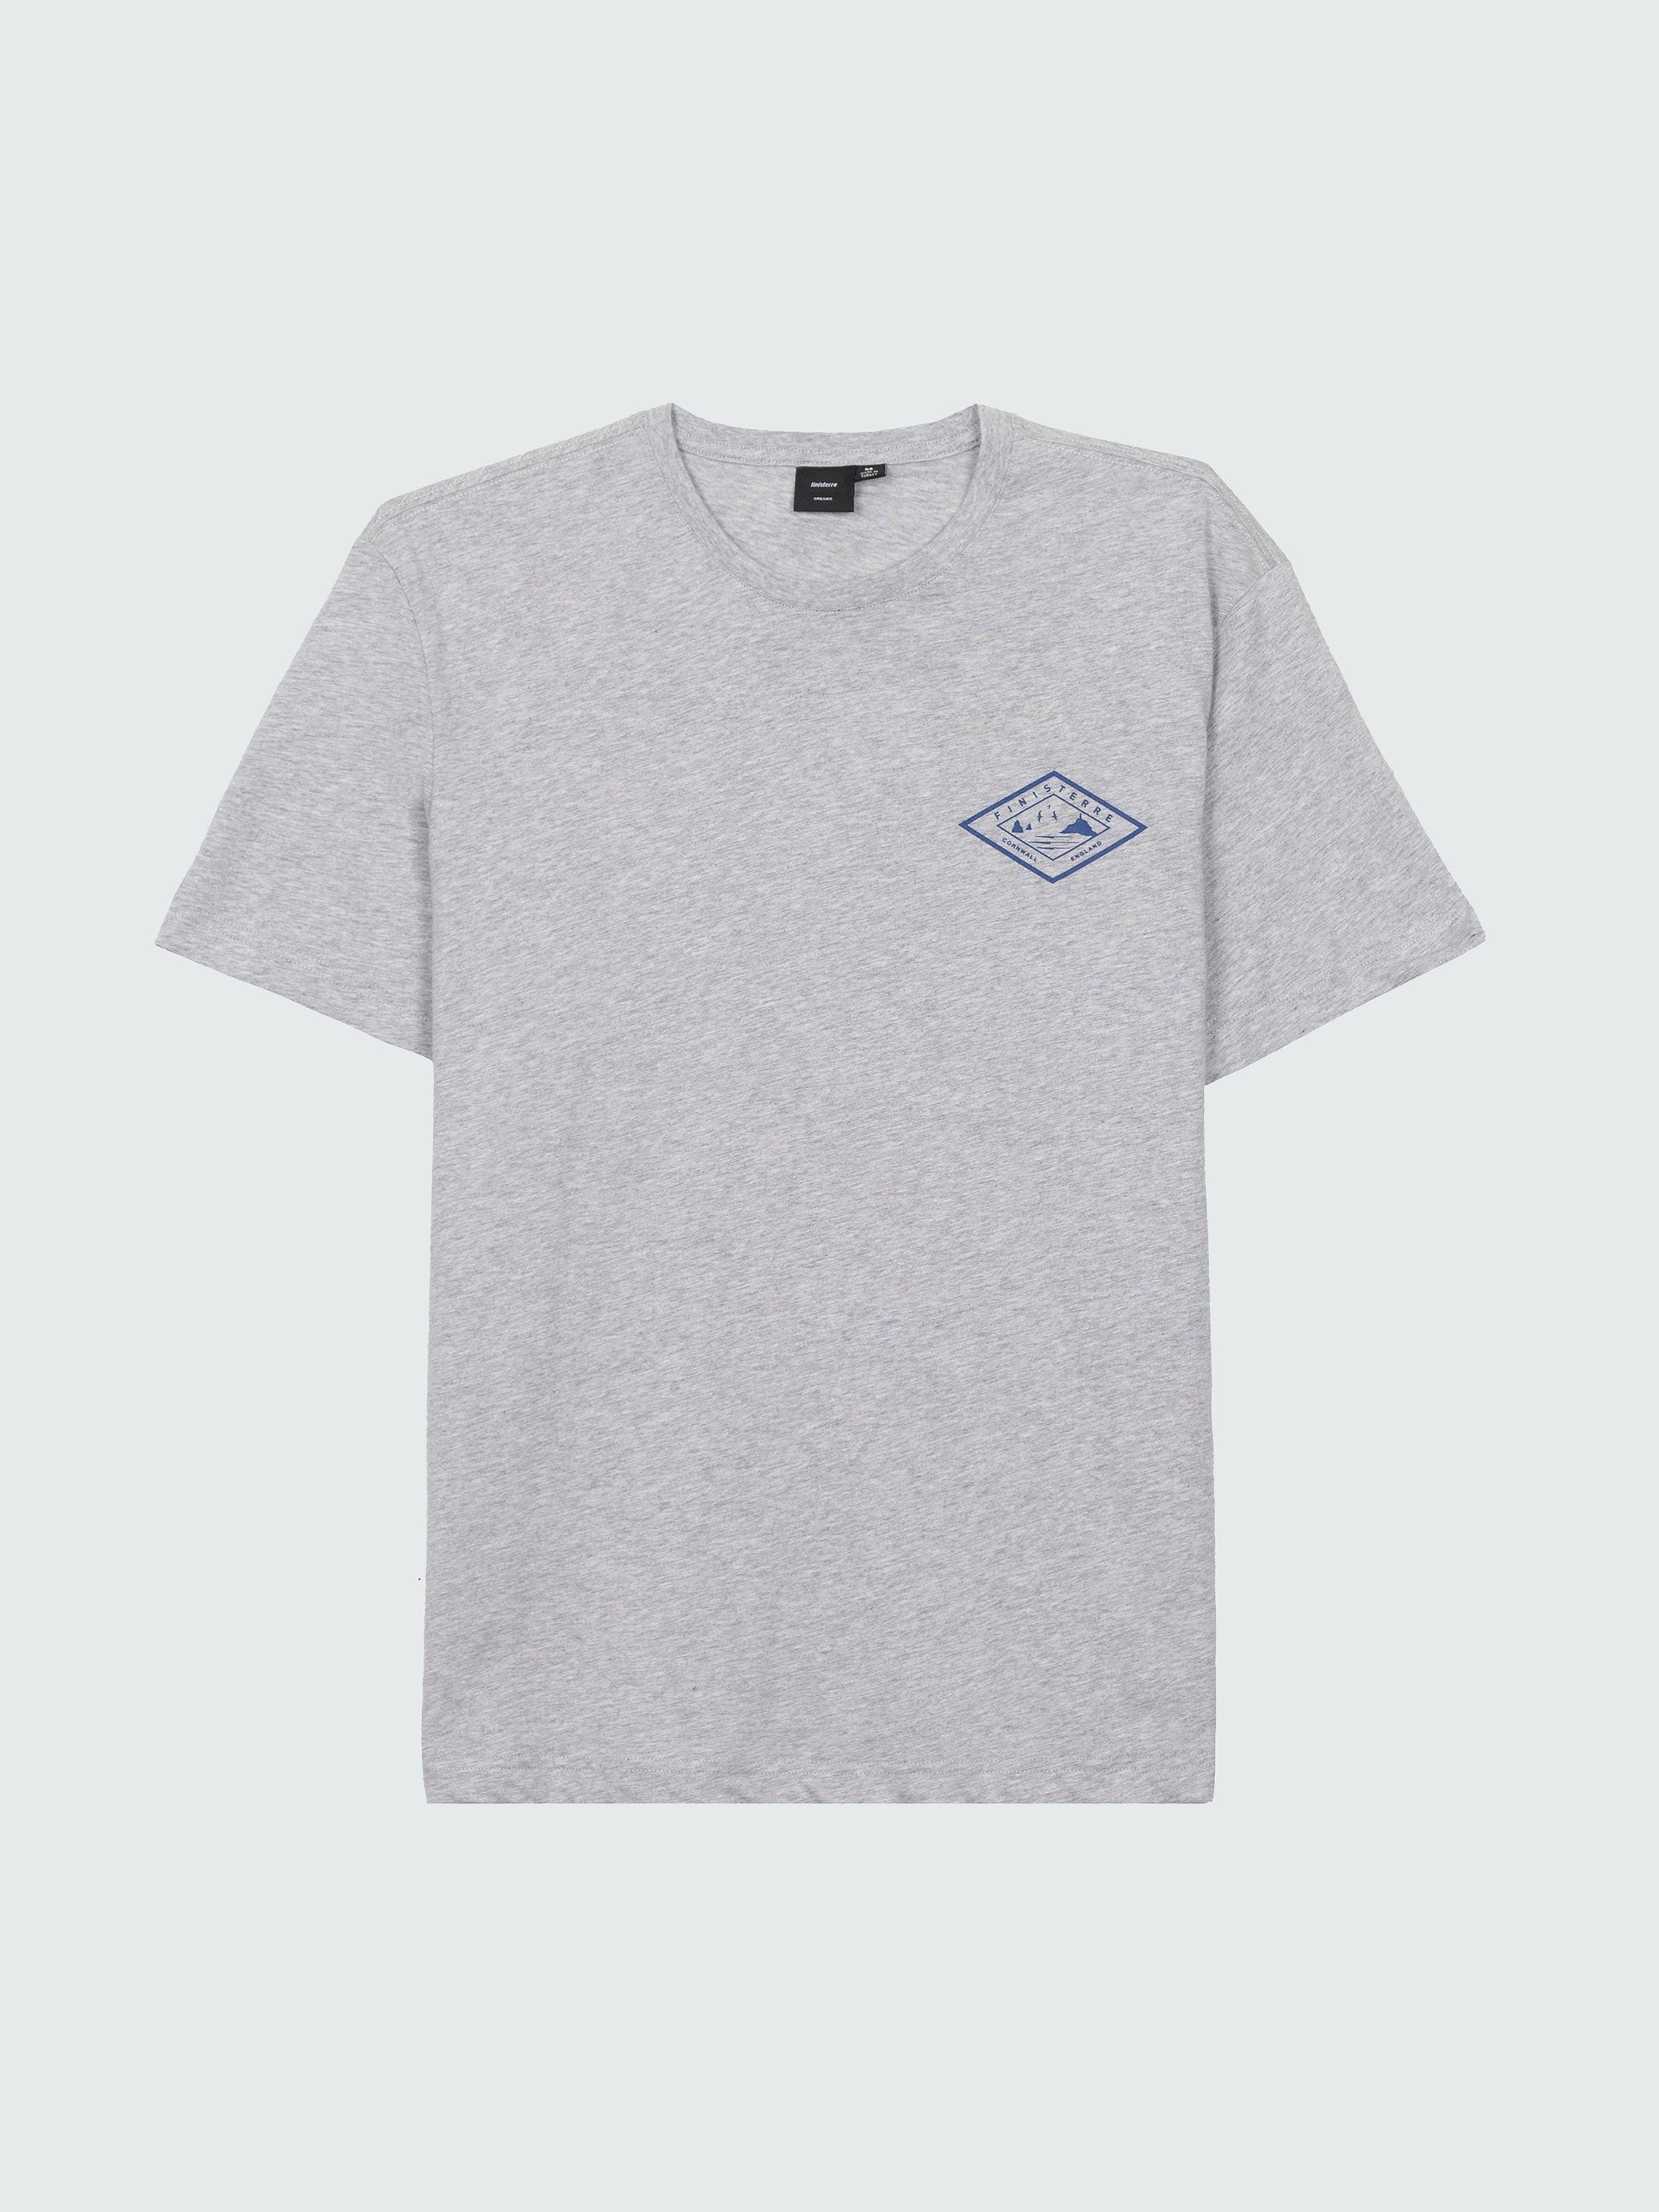 Men's Diamond Logo T-Shirt in Grey Marl | Finisterre